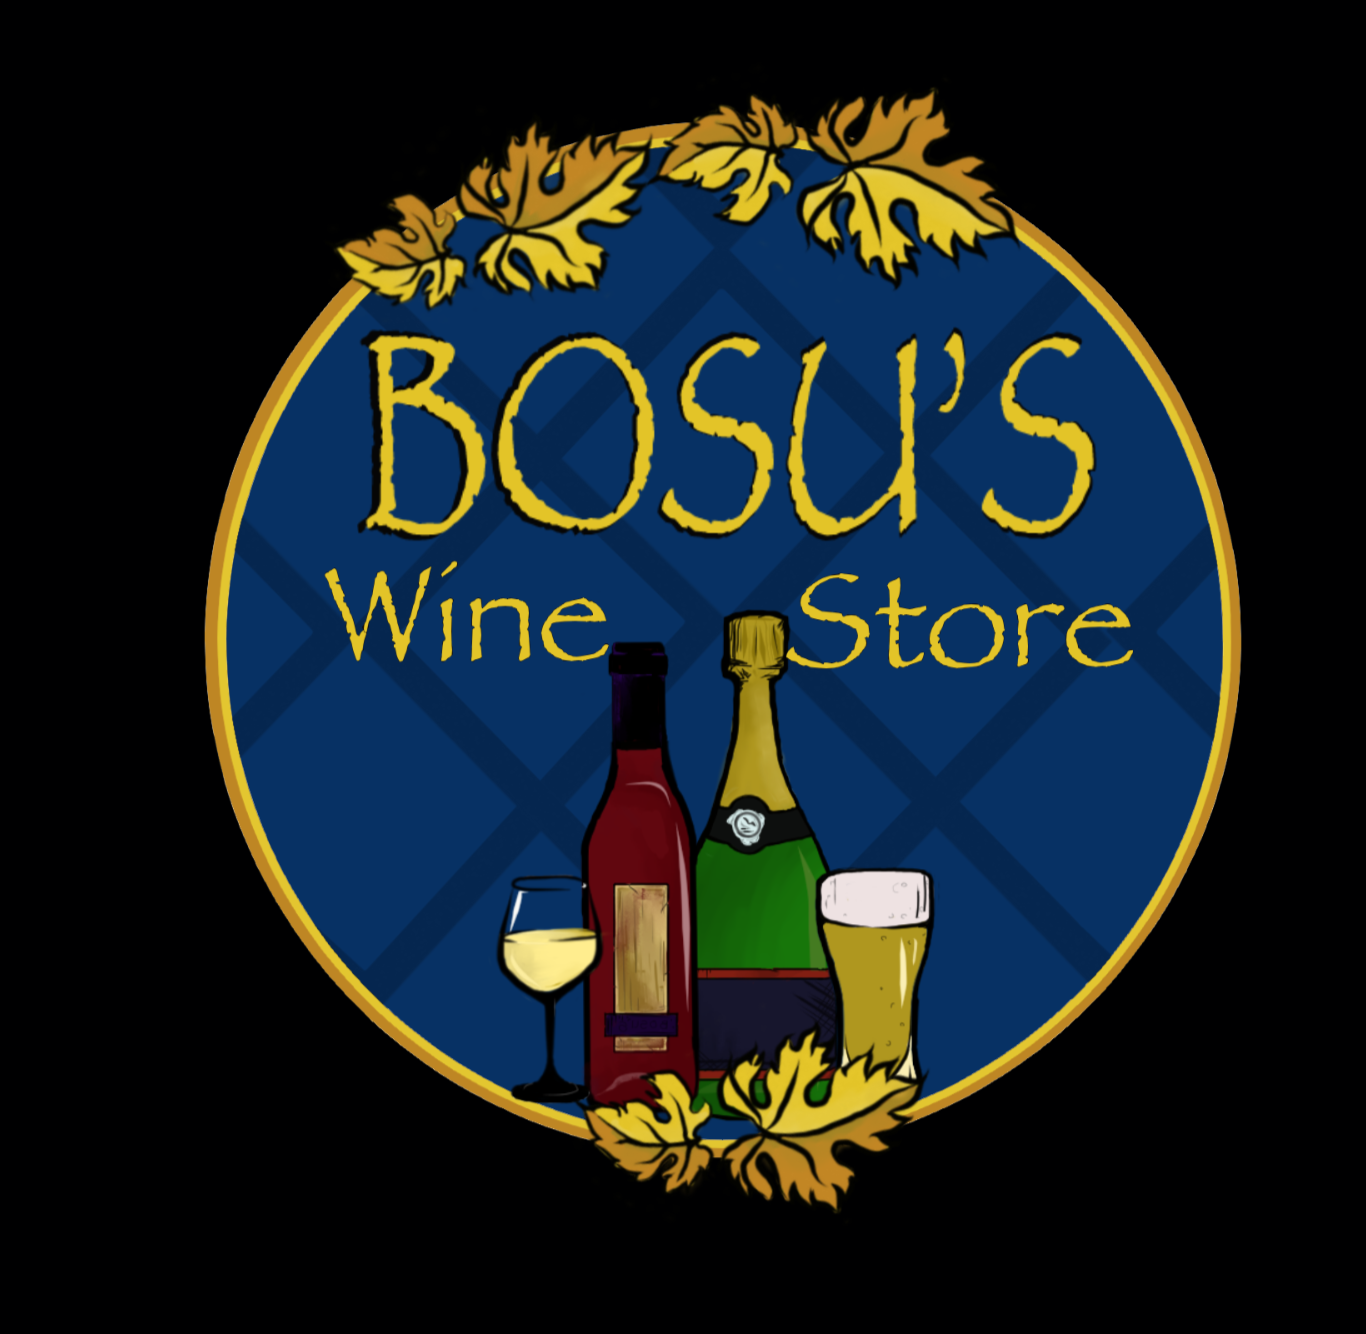 Bosu's Wine Store